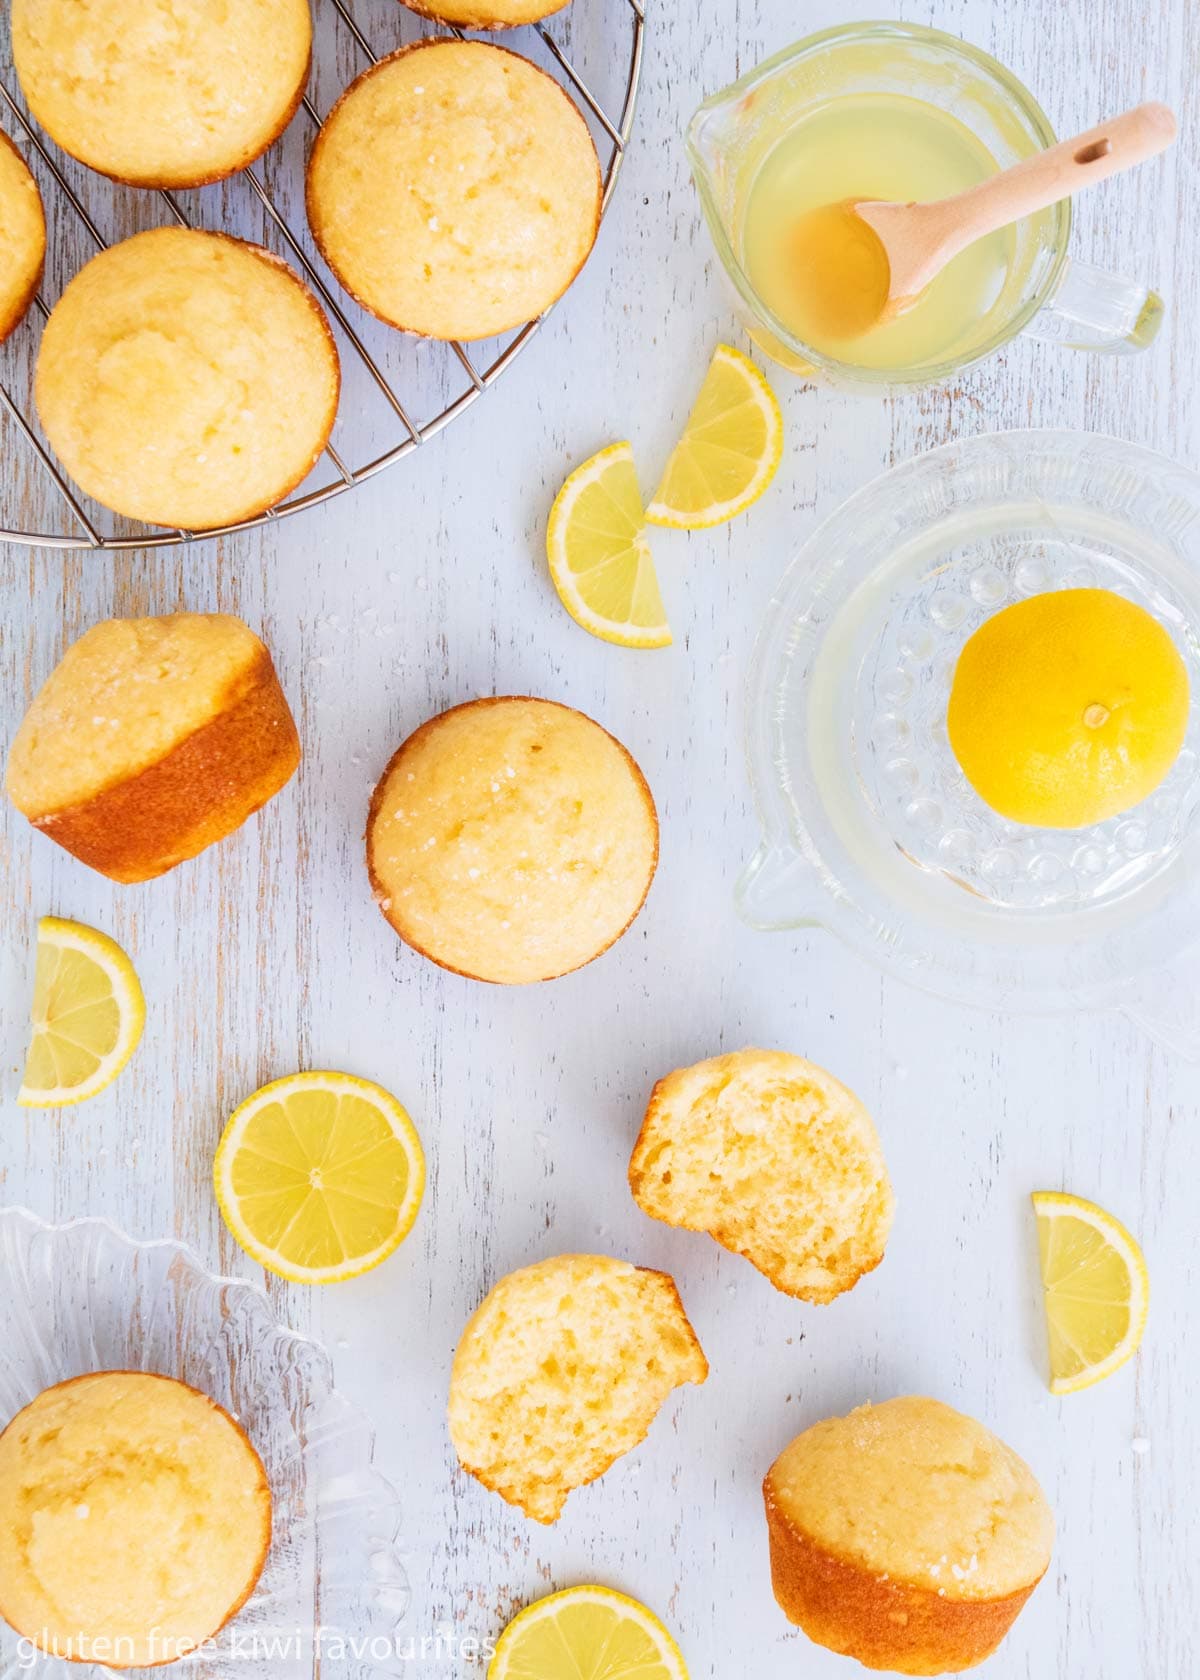 Gluten free crunchy lemon muffins on a blue background with a lemon juicer and lemon slices.